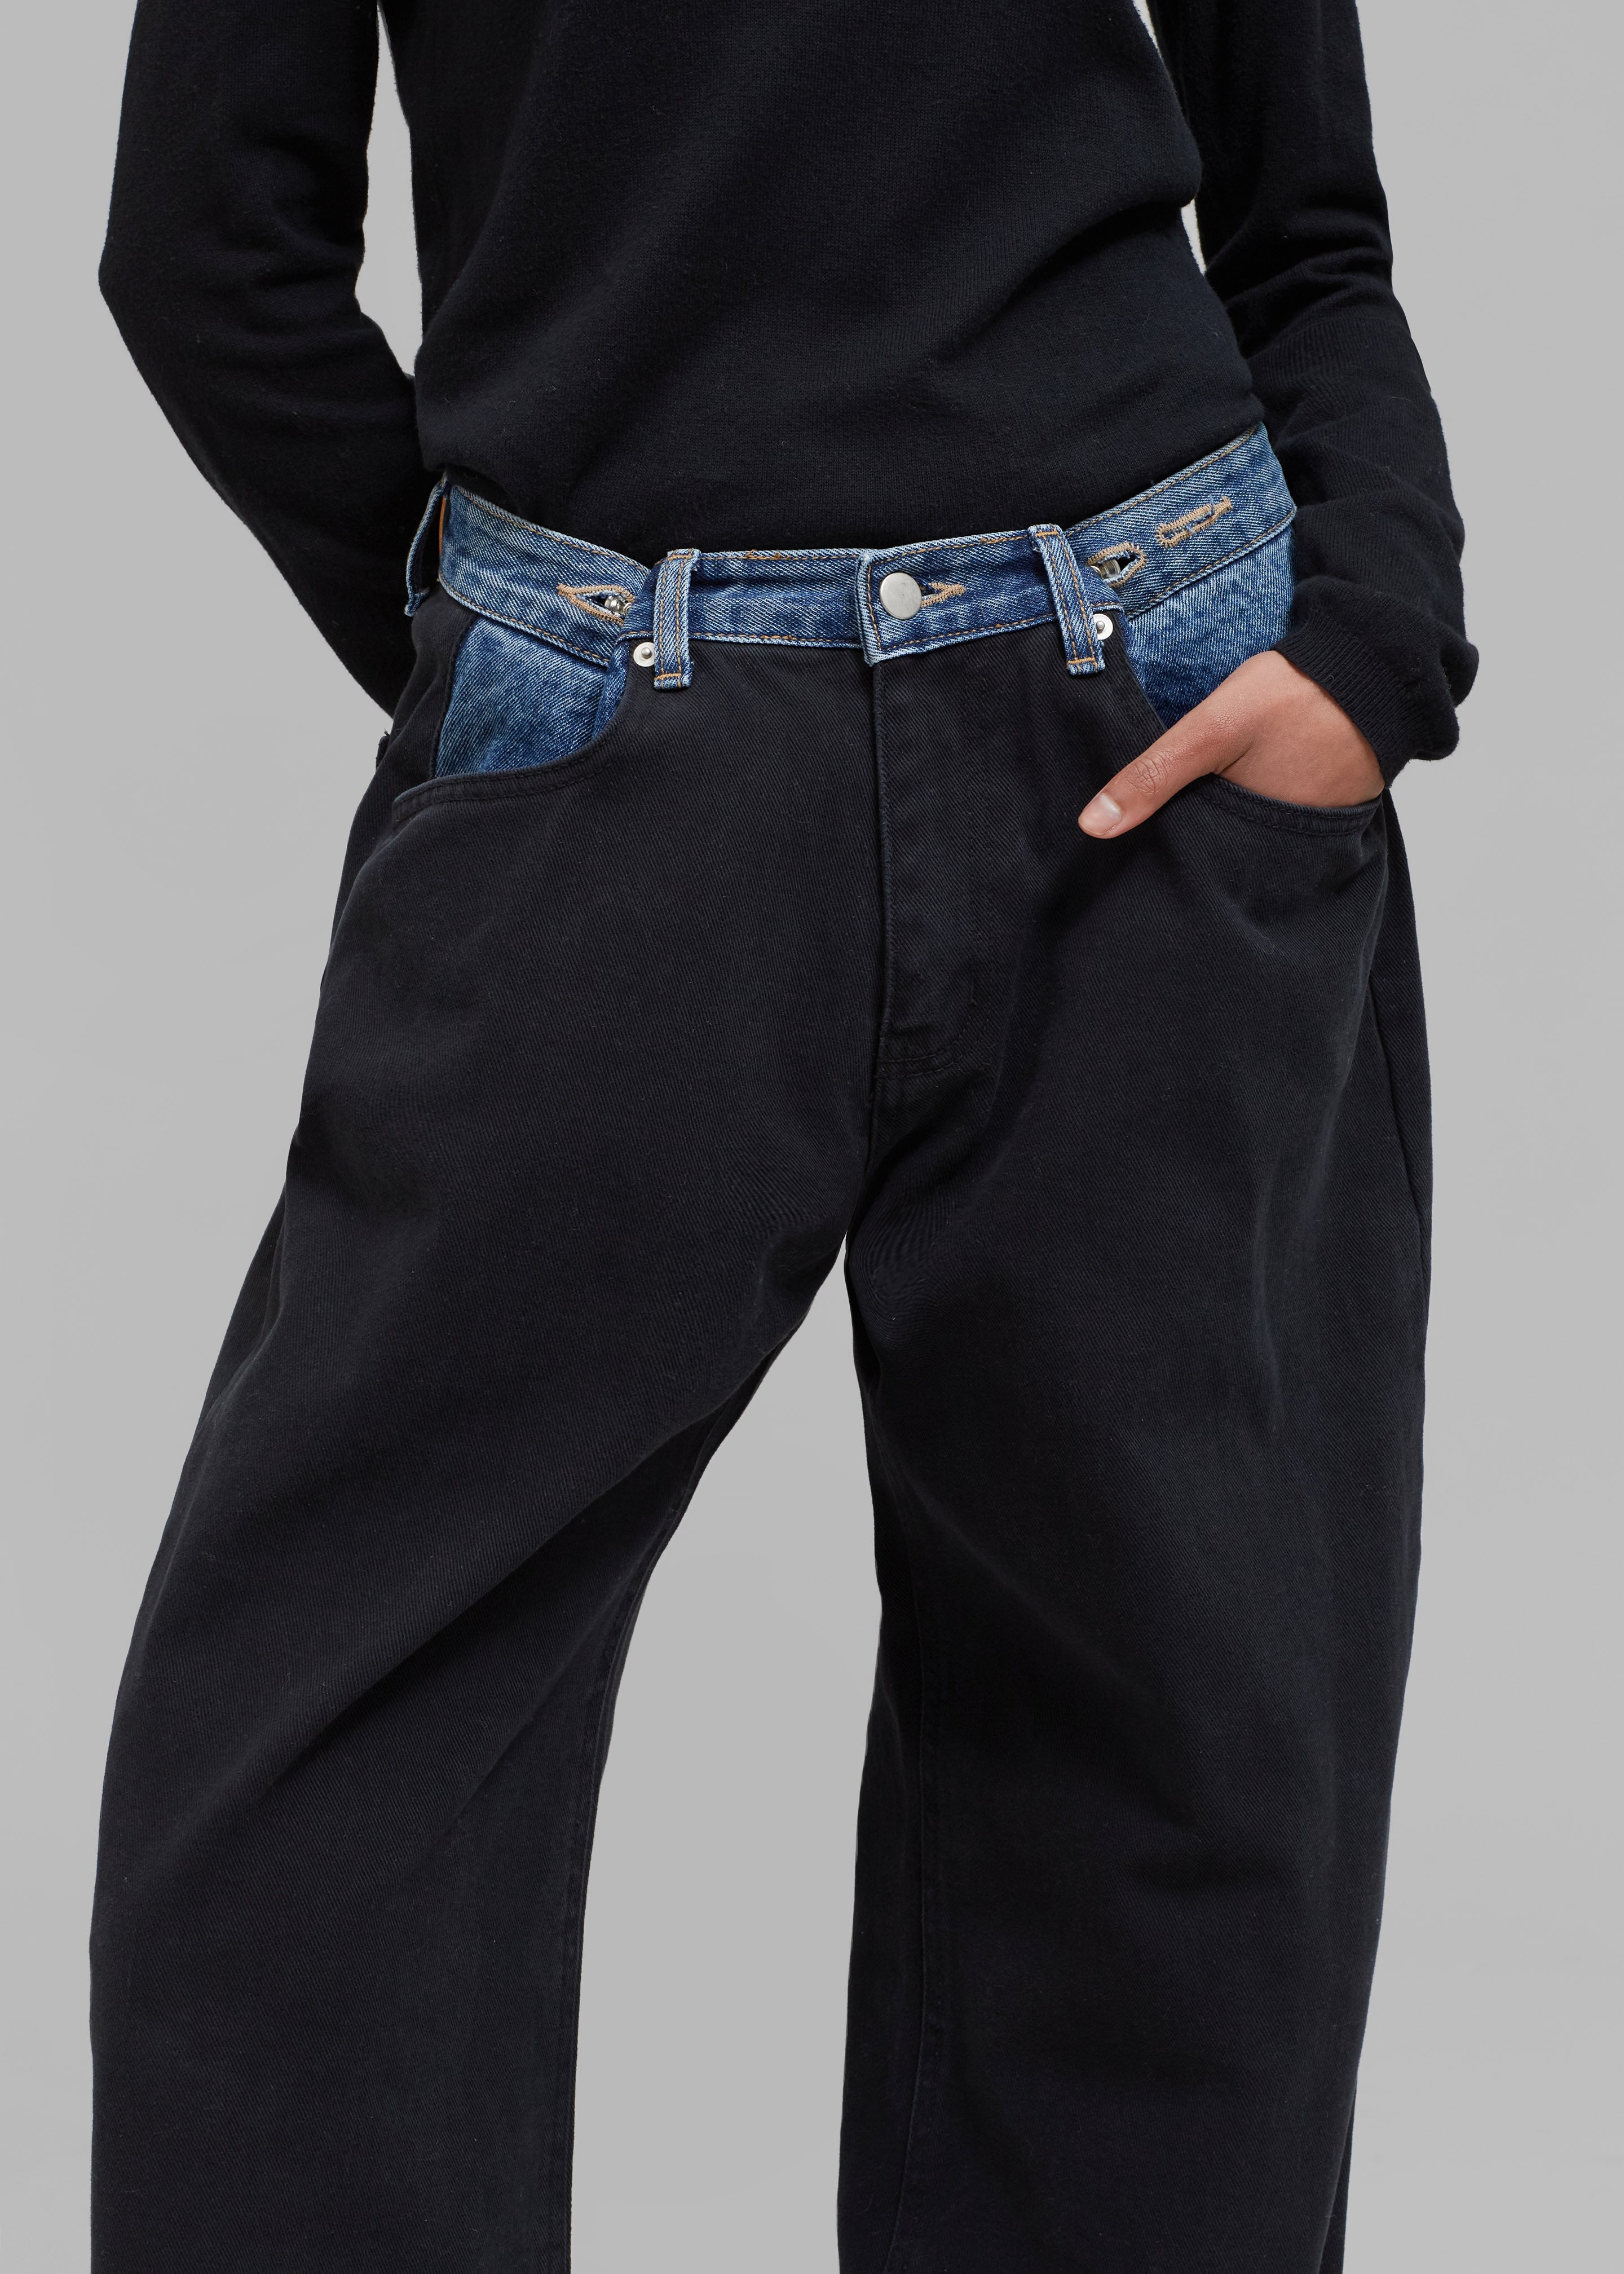 Hayla Contrast Denim Pants - Black/Blue